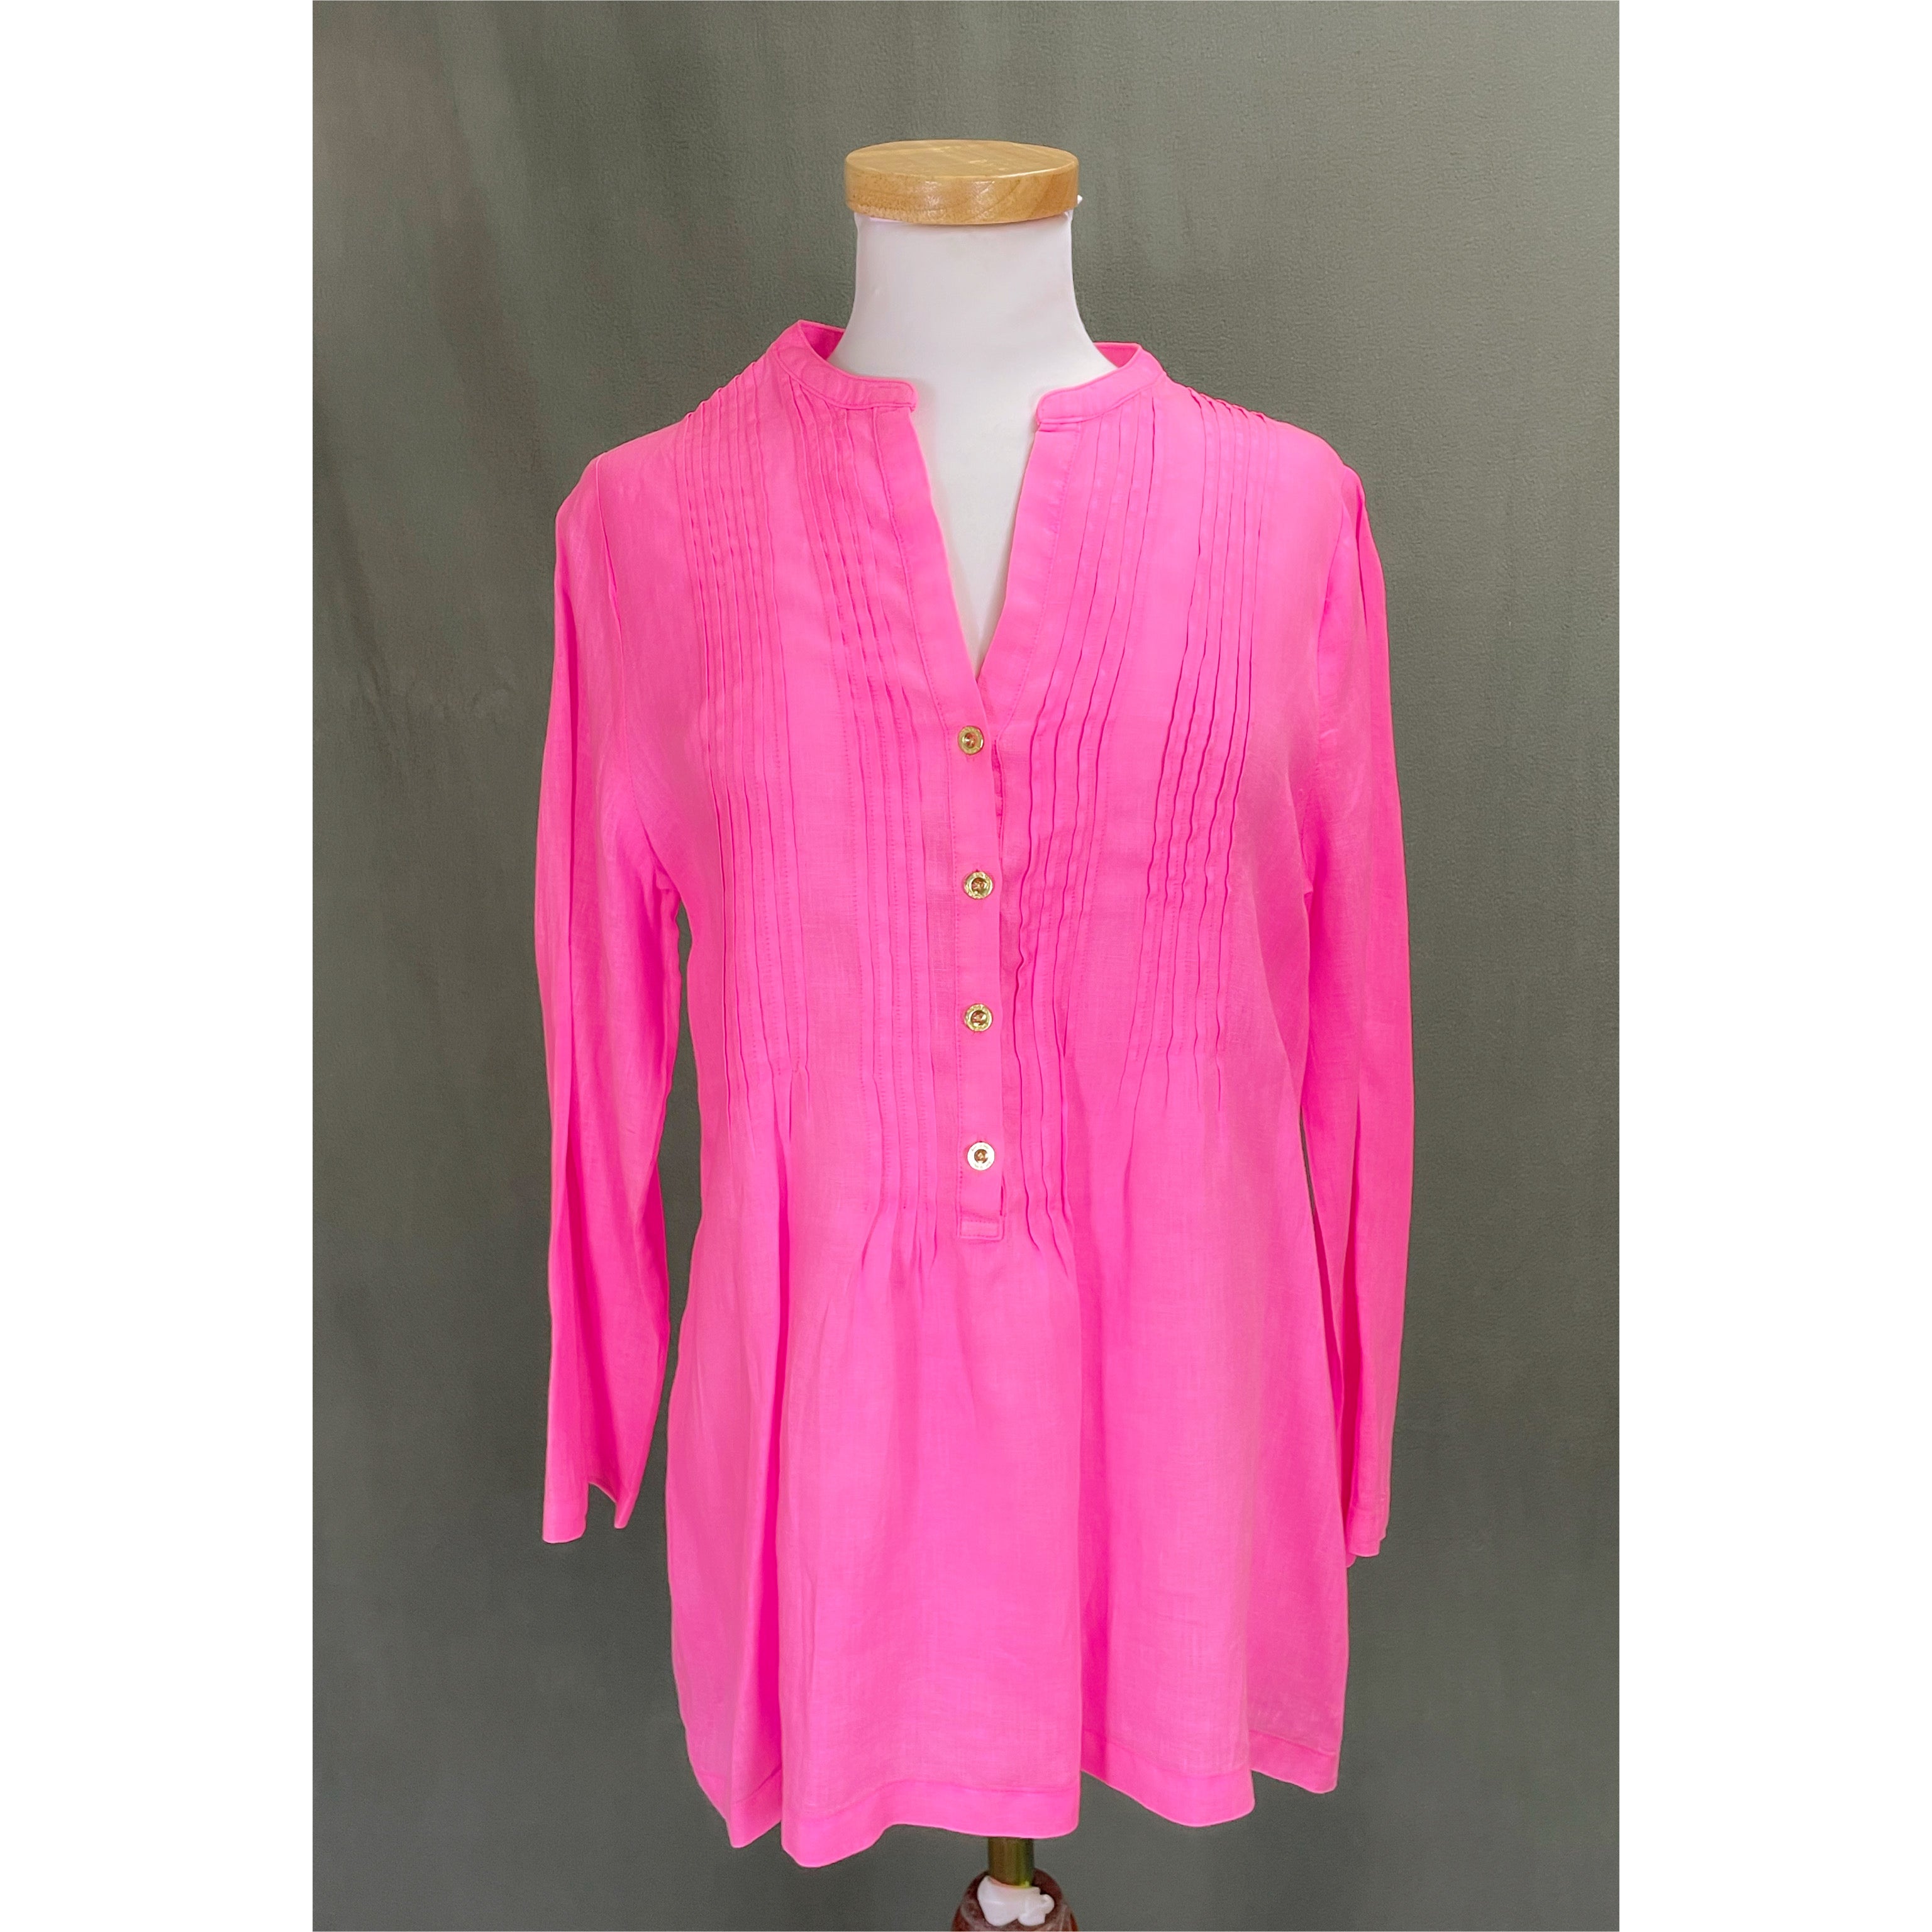 Lilly Pulitzer hot pink linen Sarasota blouse, size XS